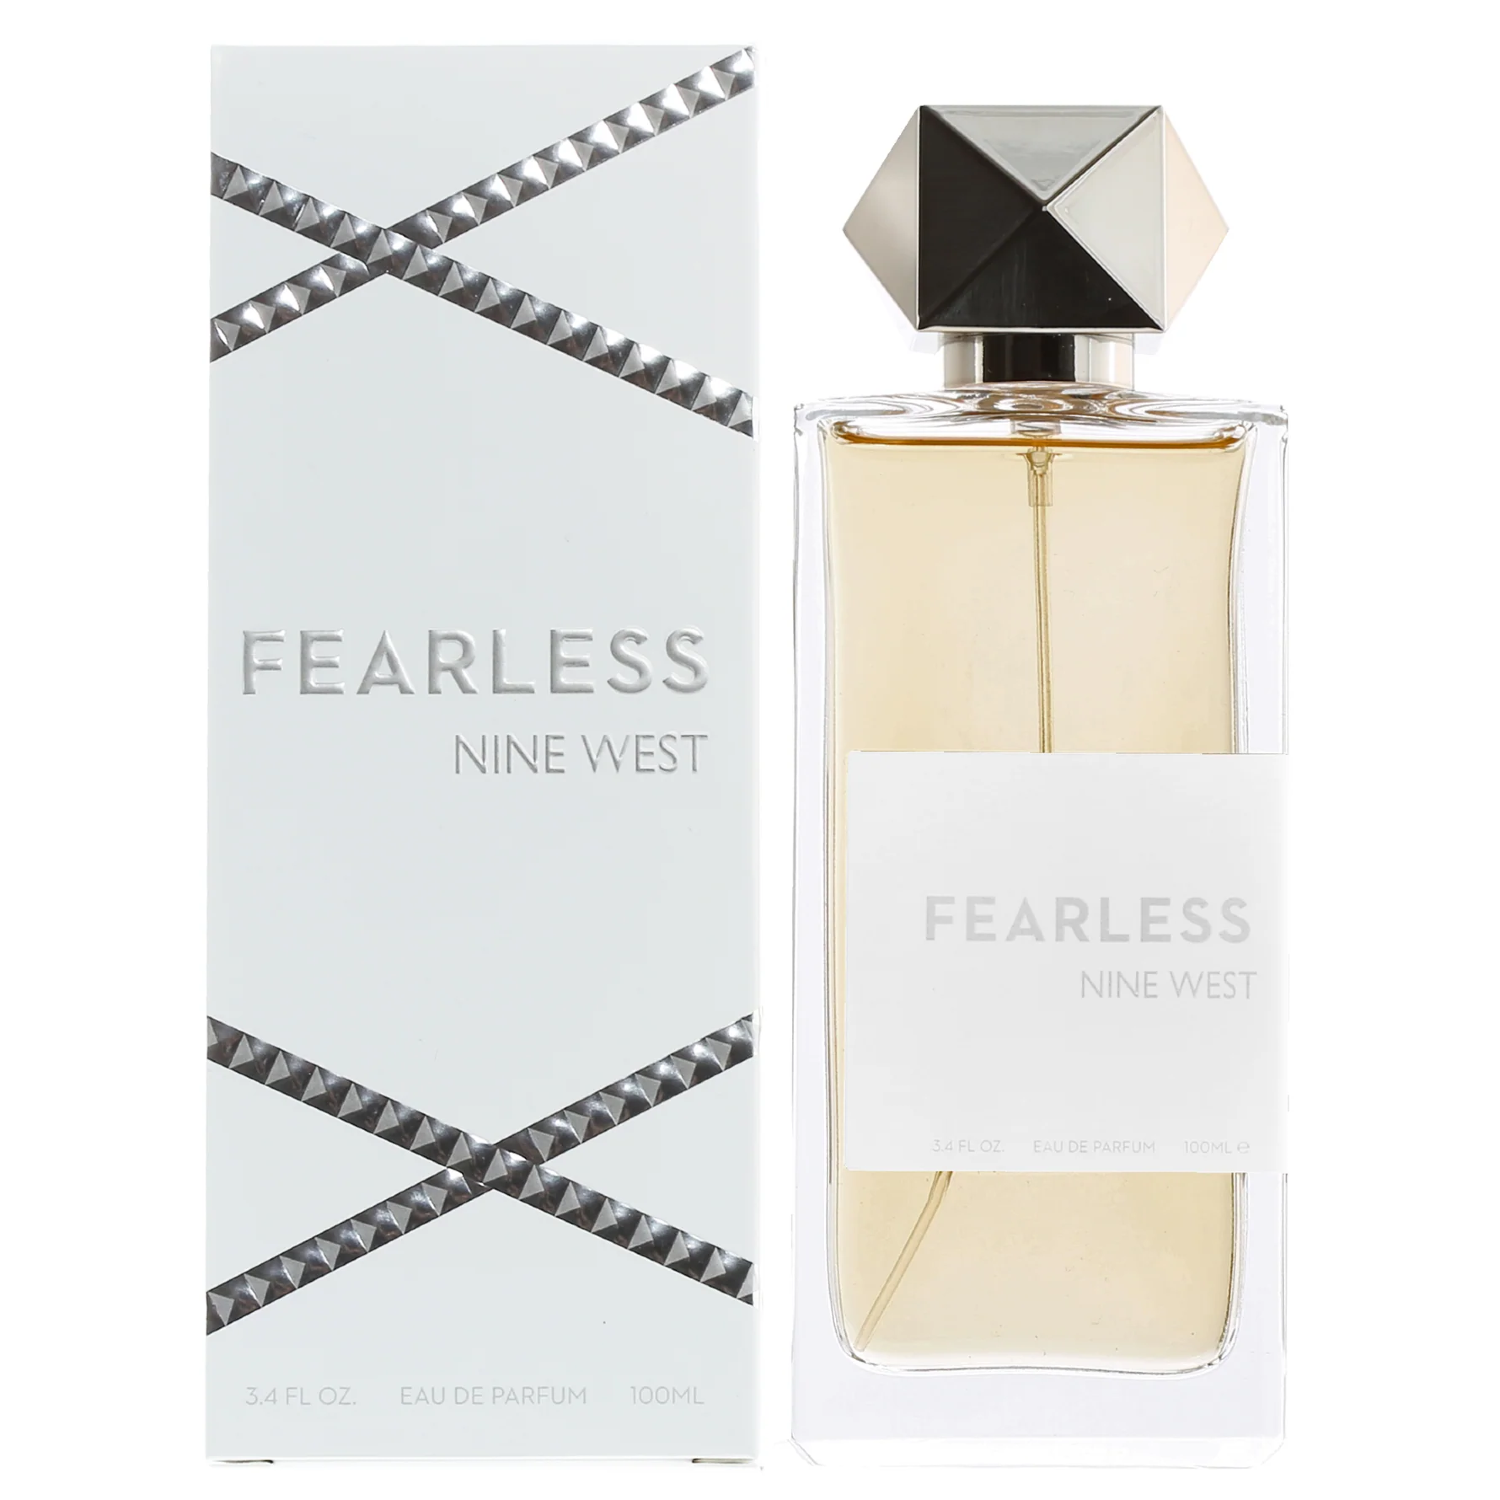 Nine West 3.4oz Fearless Ladies Perfume Spray $20 + Free Shipping